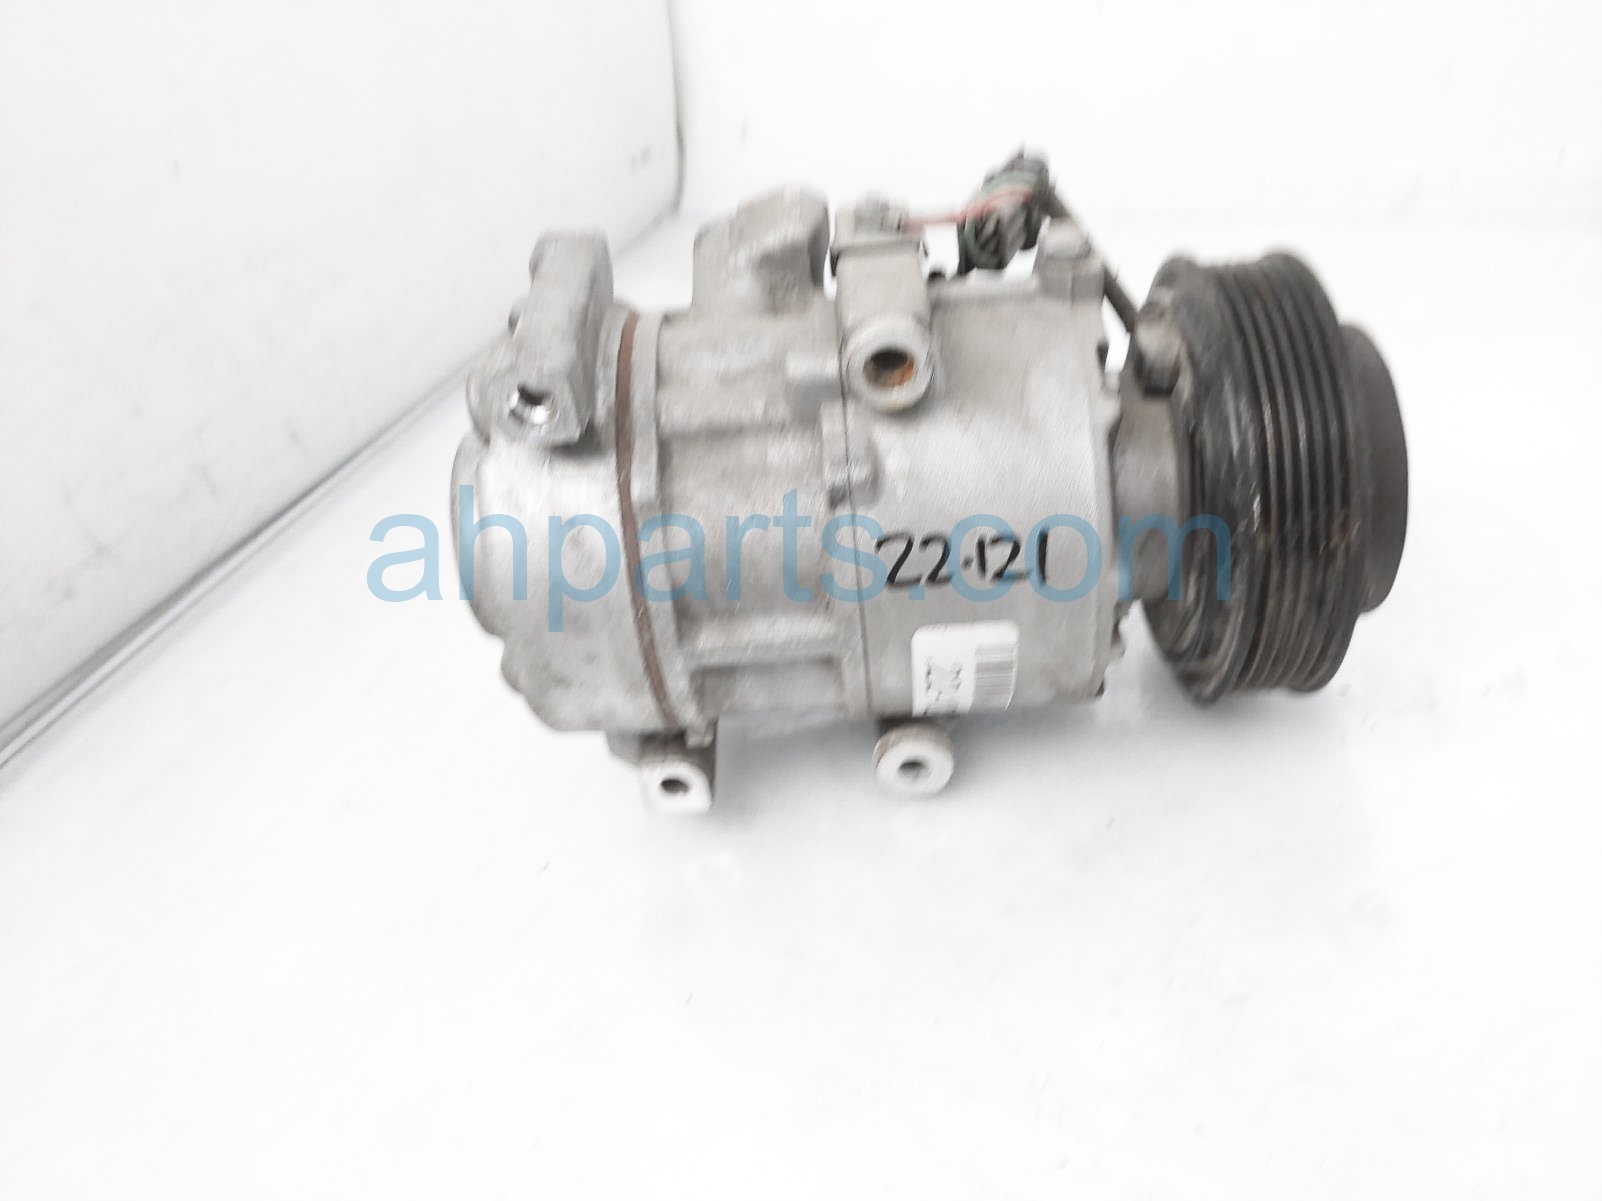 2020 Kia Sportage Air Pump + Clutch Ac Compressor 2.4l At 97701